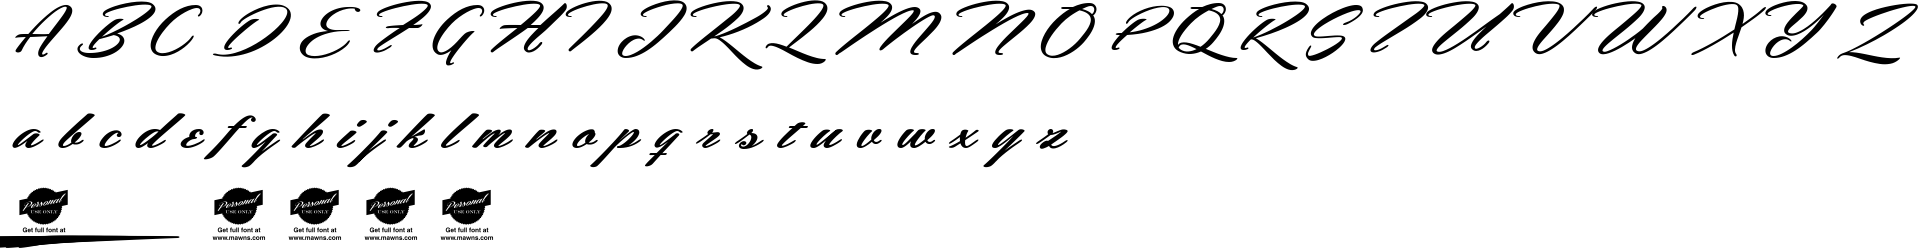 Hemmet Font Character Map